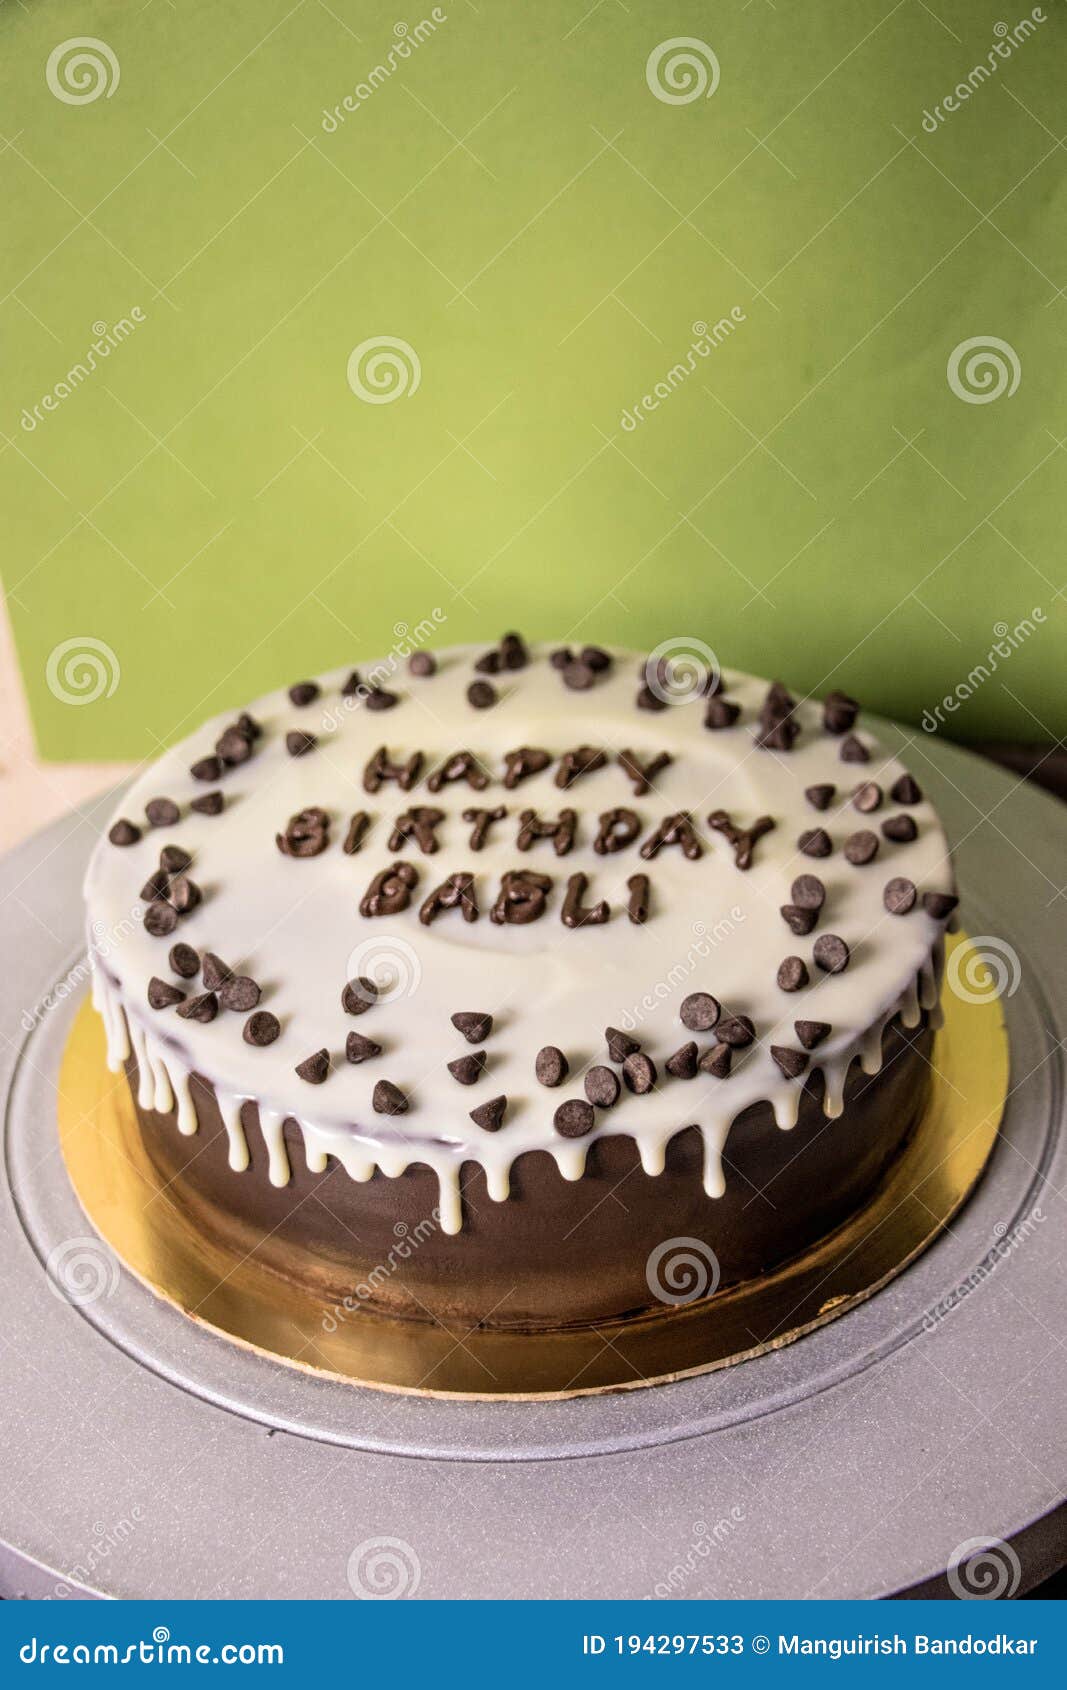 Vanilla Chocolate Chip Birthday Cake Stock Image - Image of indian ...